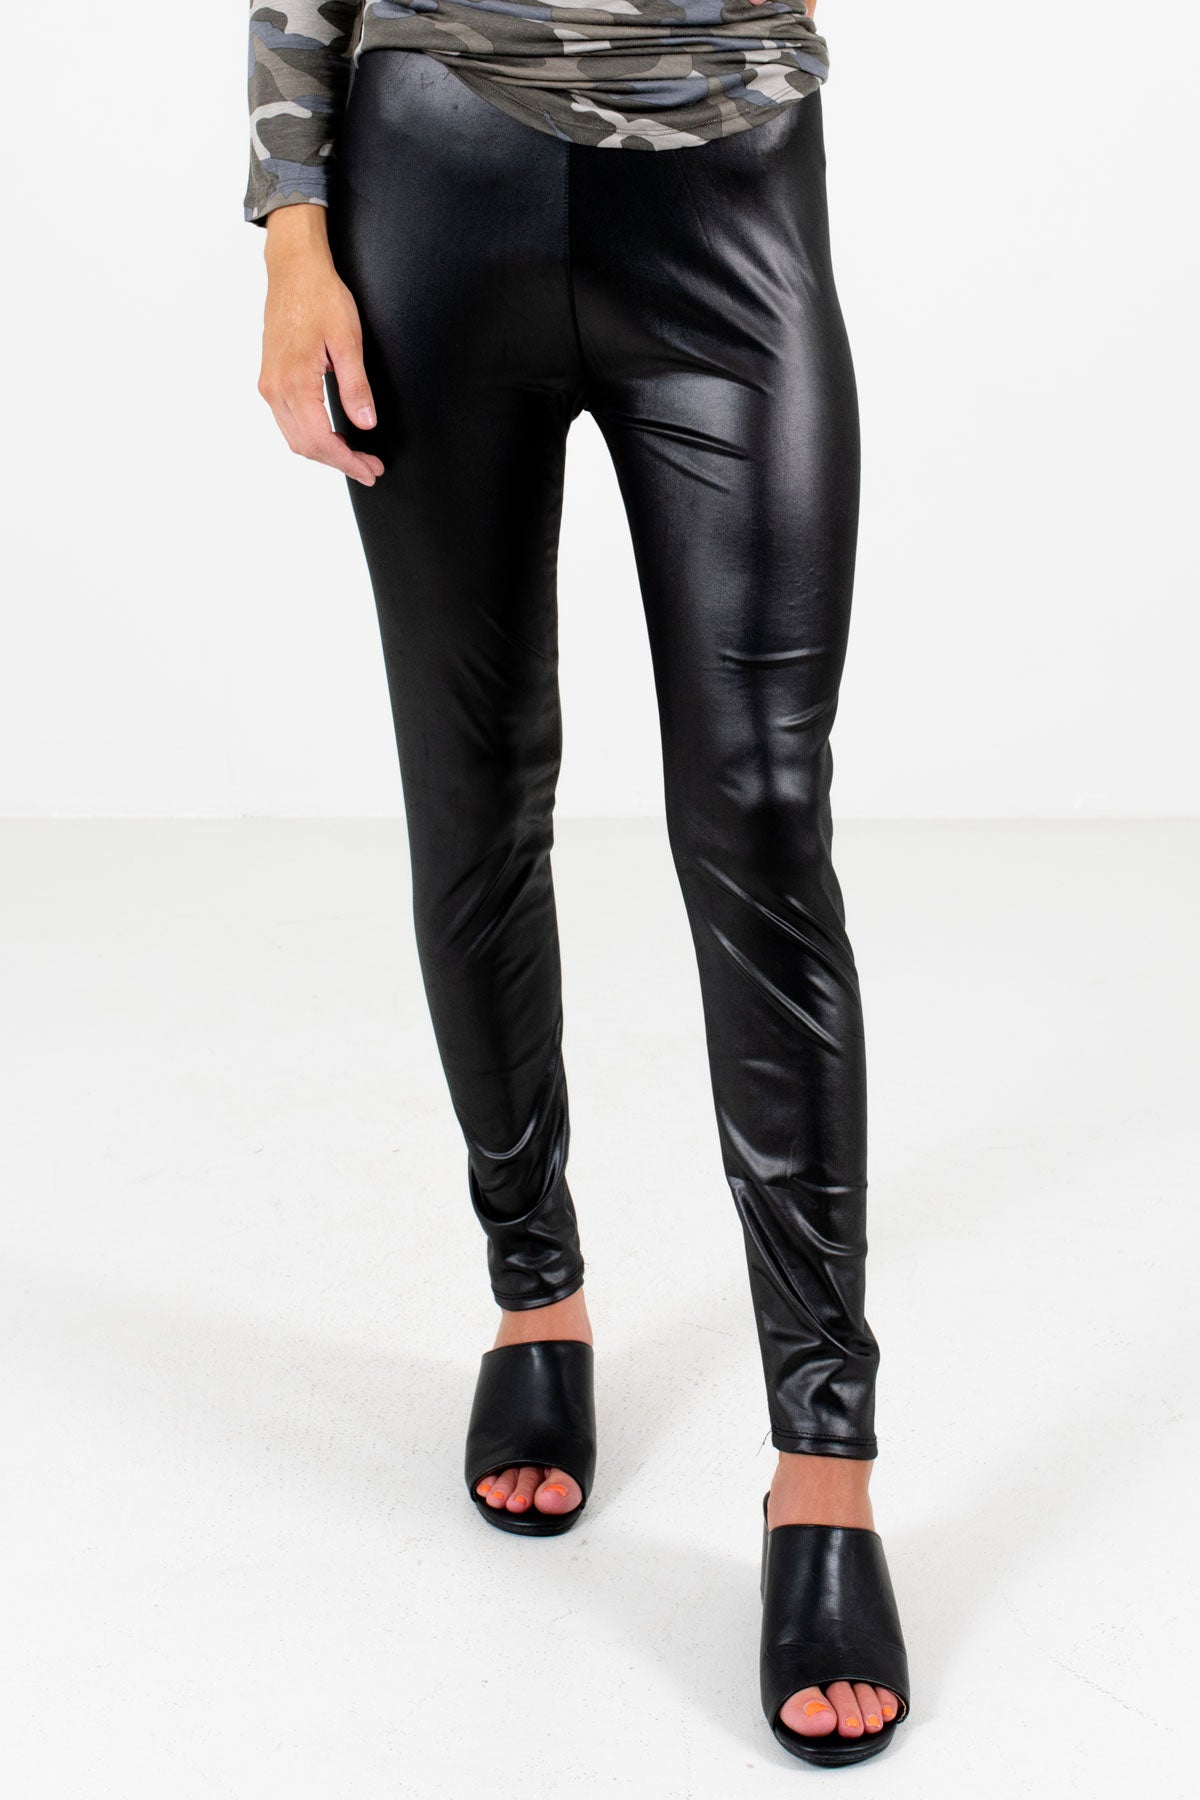 Black Faux Leather Material Boutique Leggings for Women